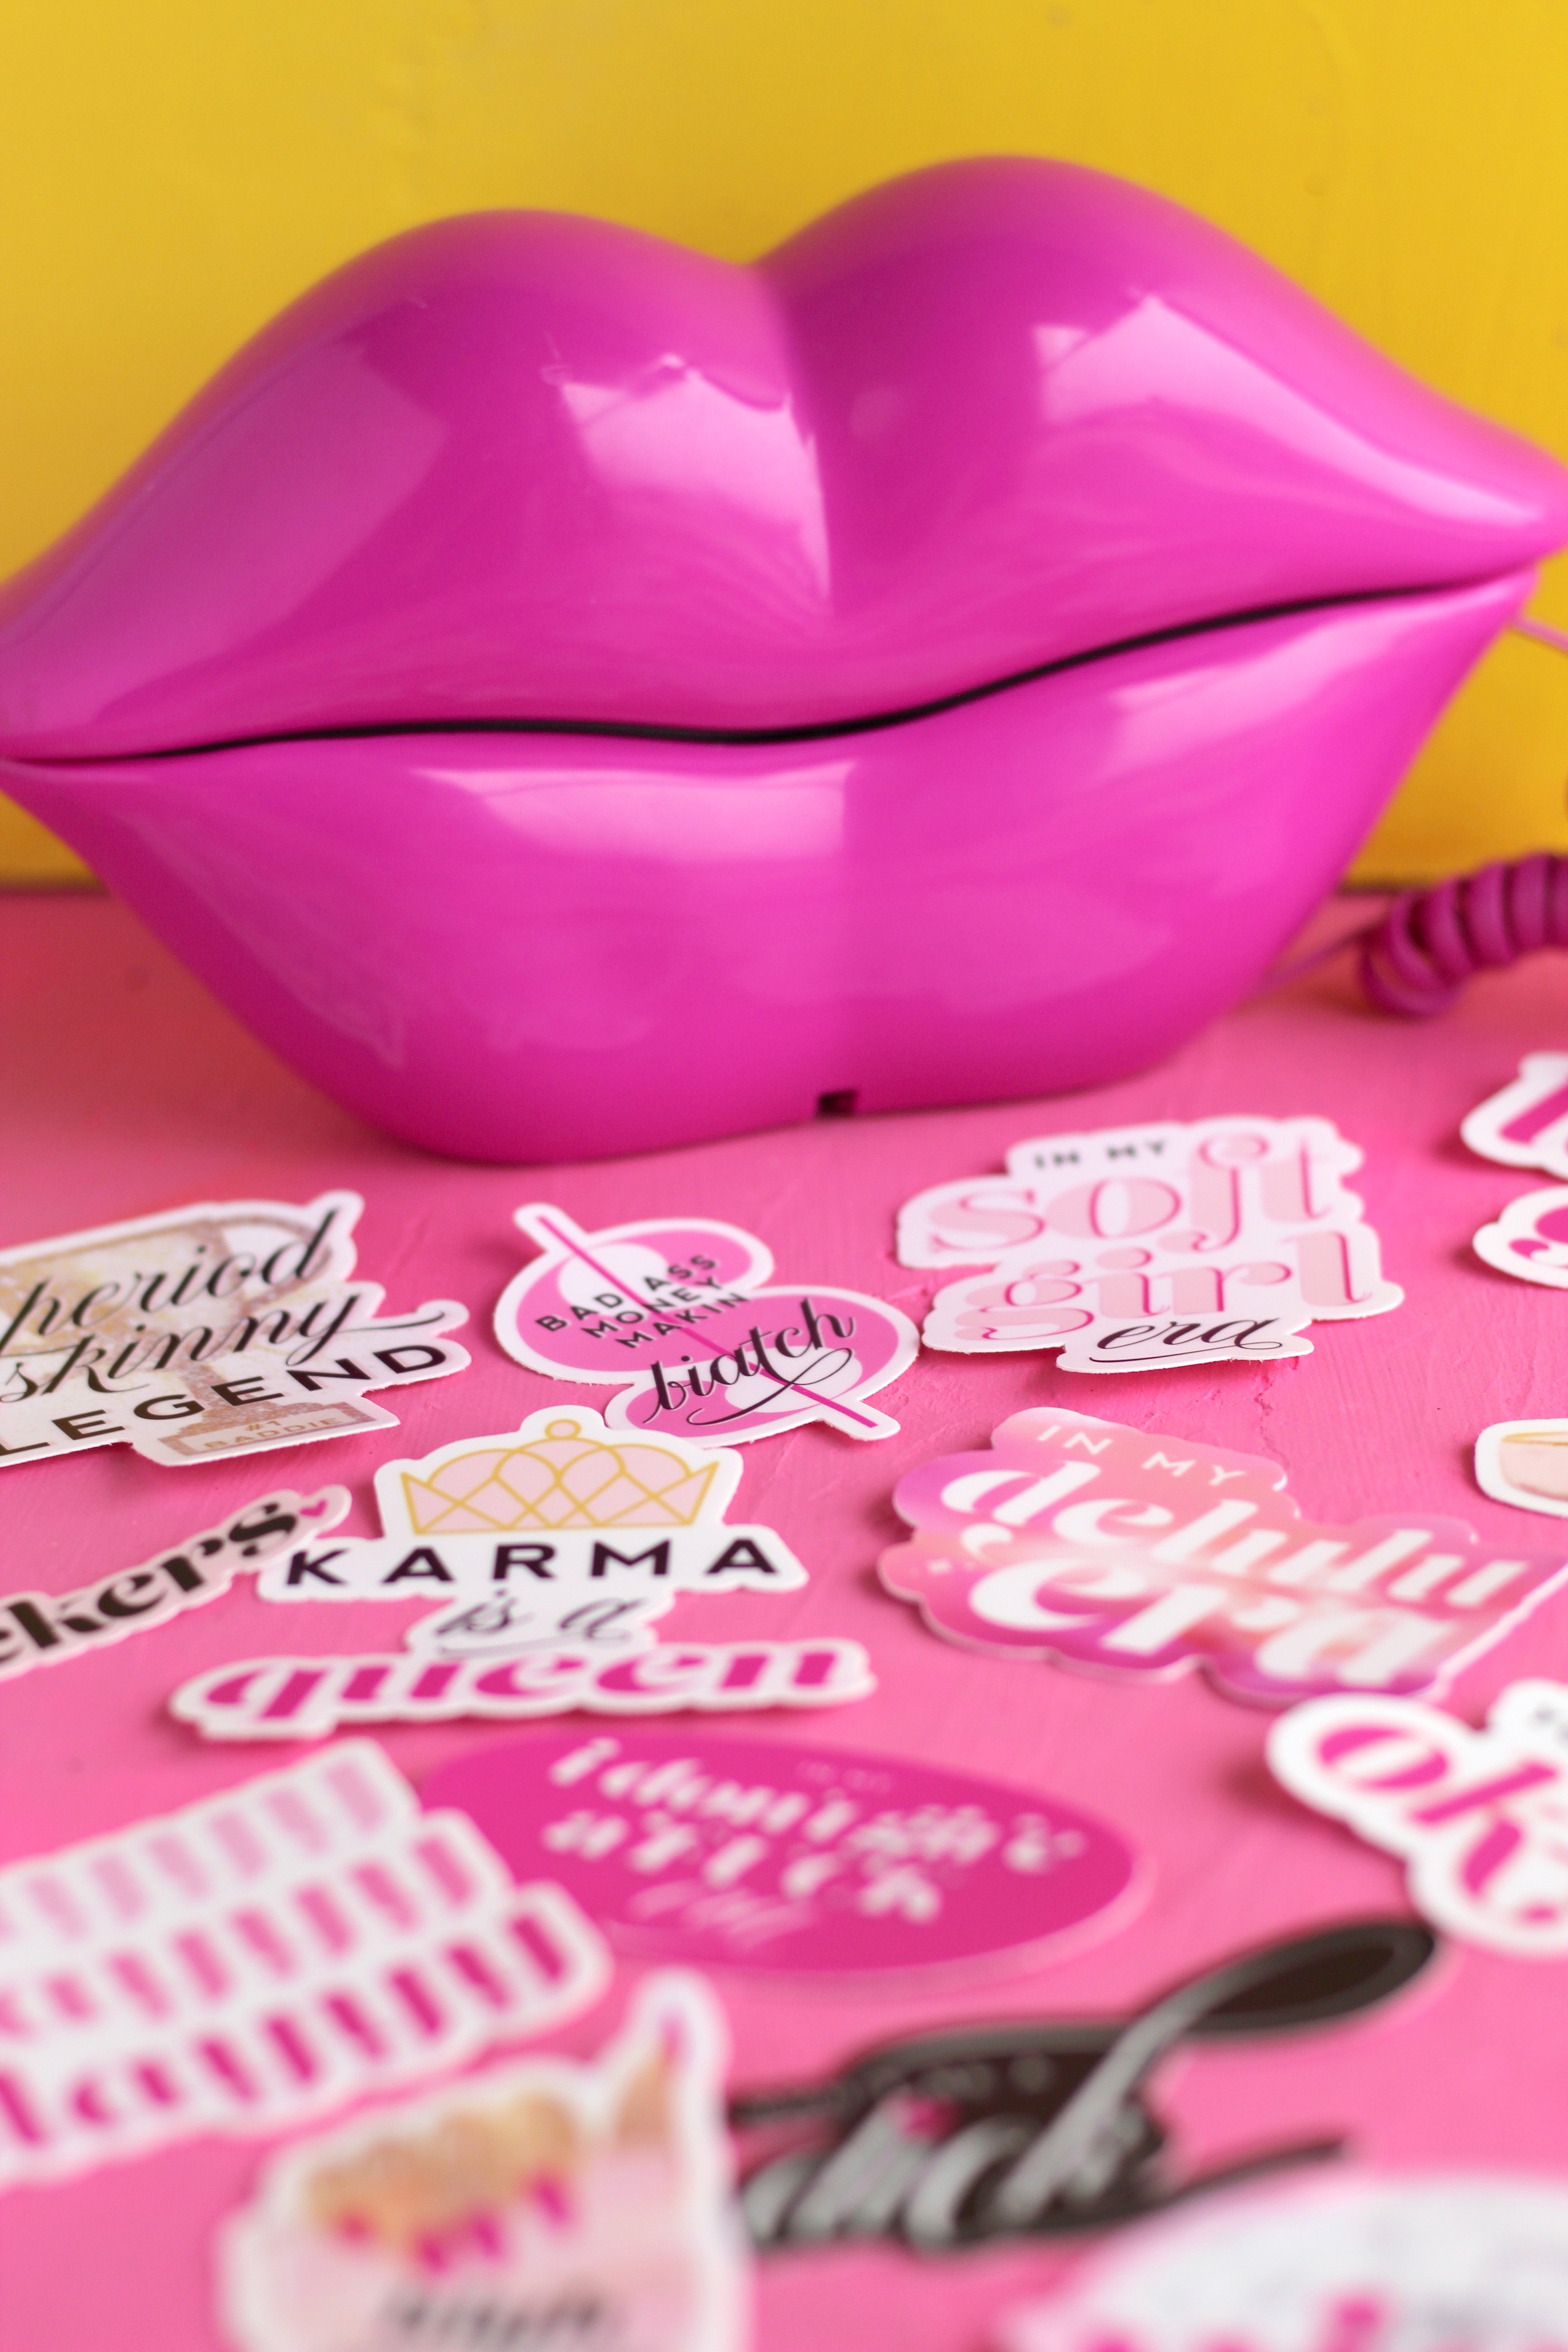 In My Soft Girl Era Sweet Pink Sticker – Kitty Meow HQ